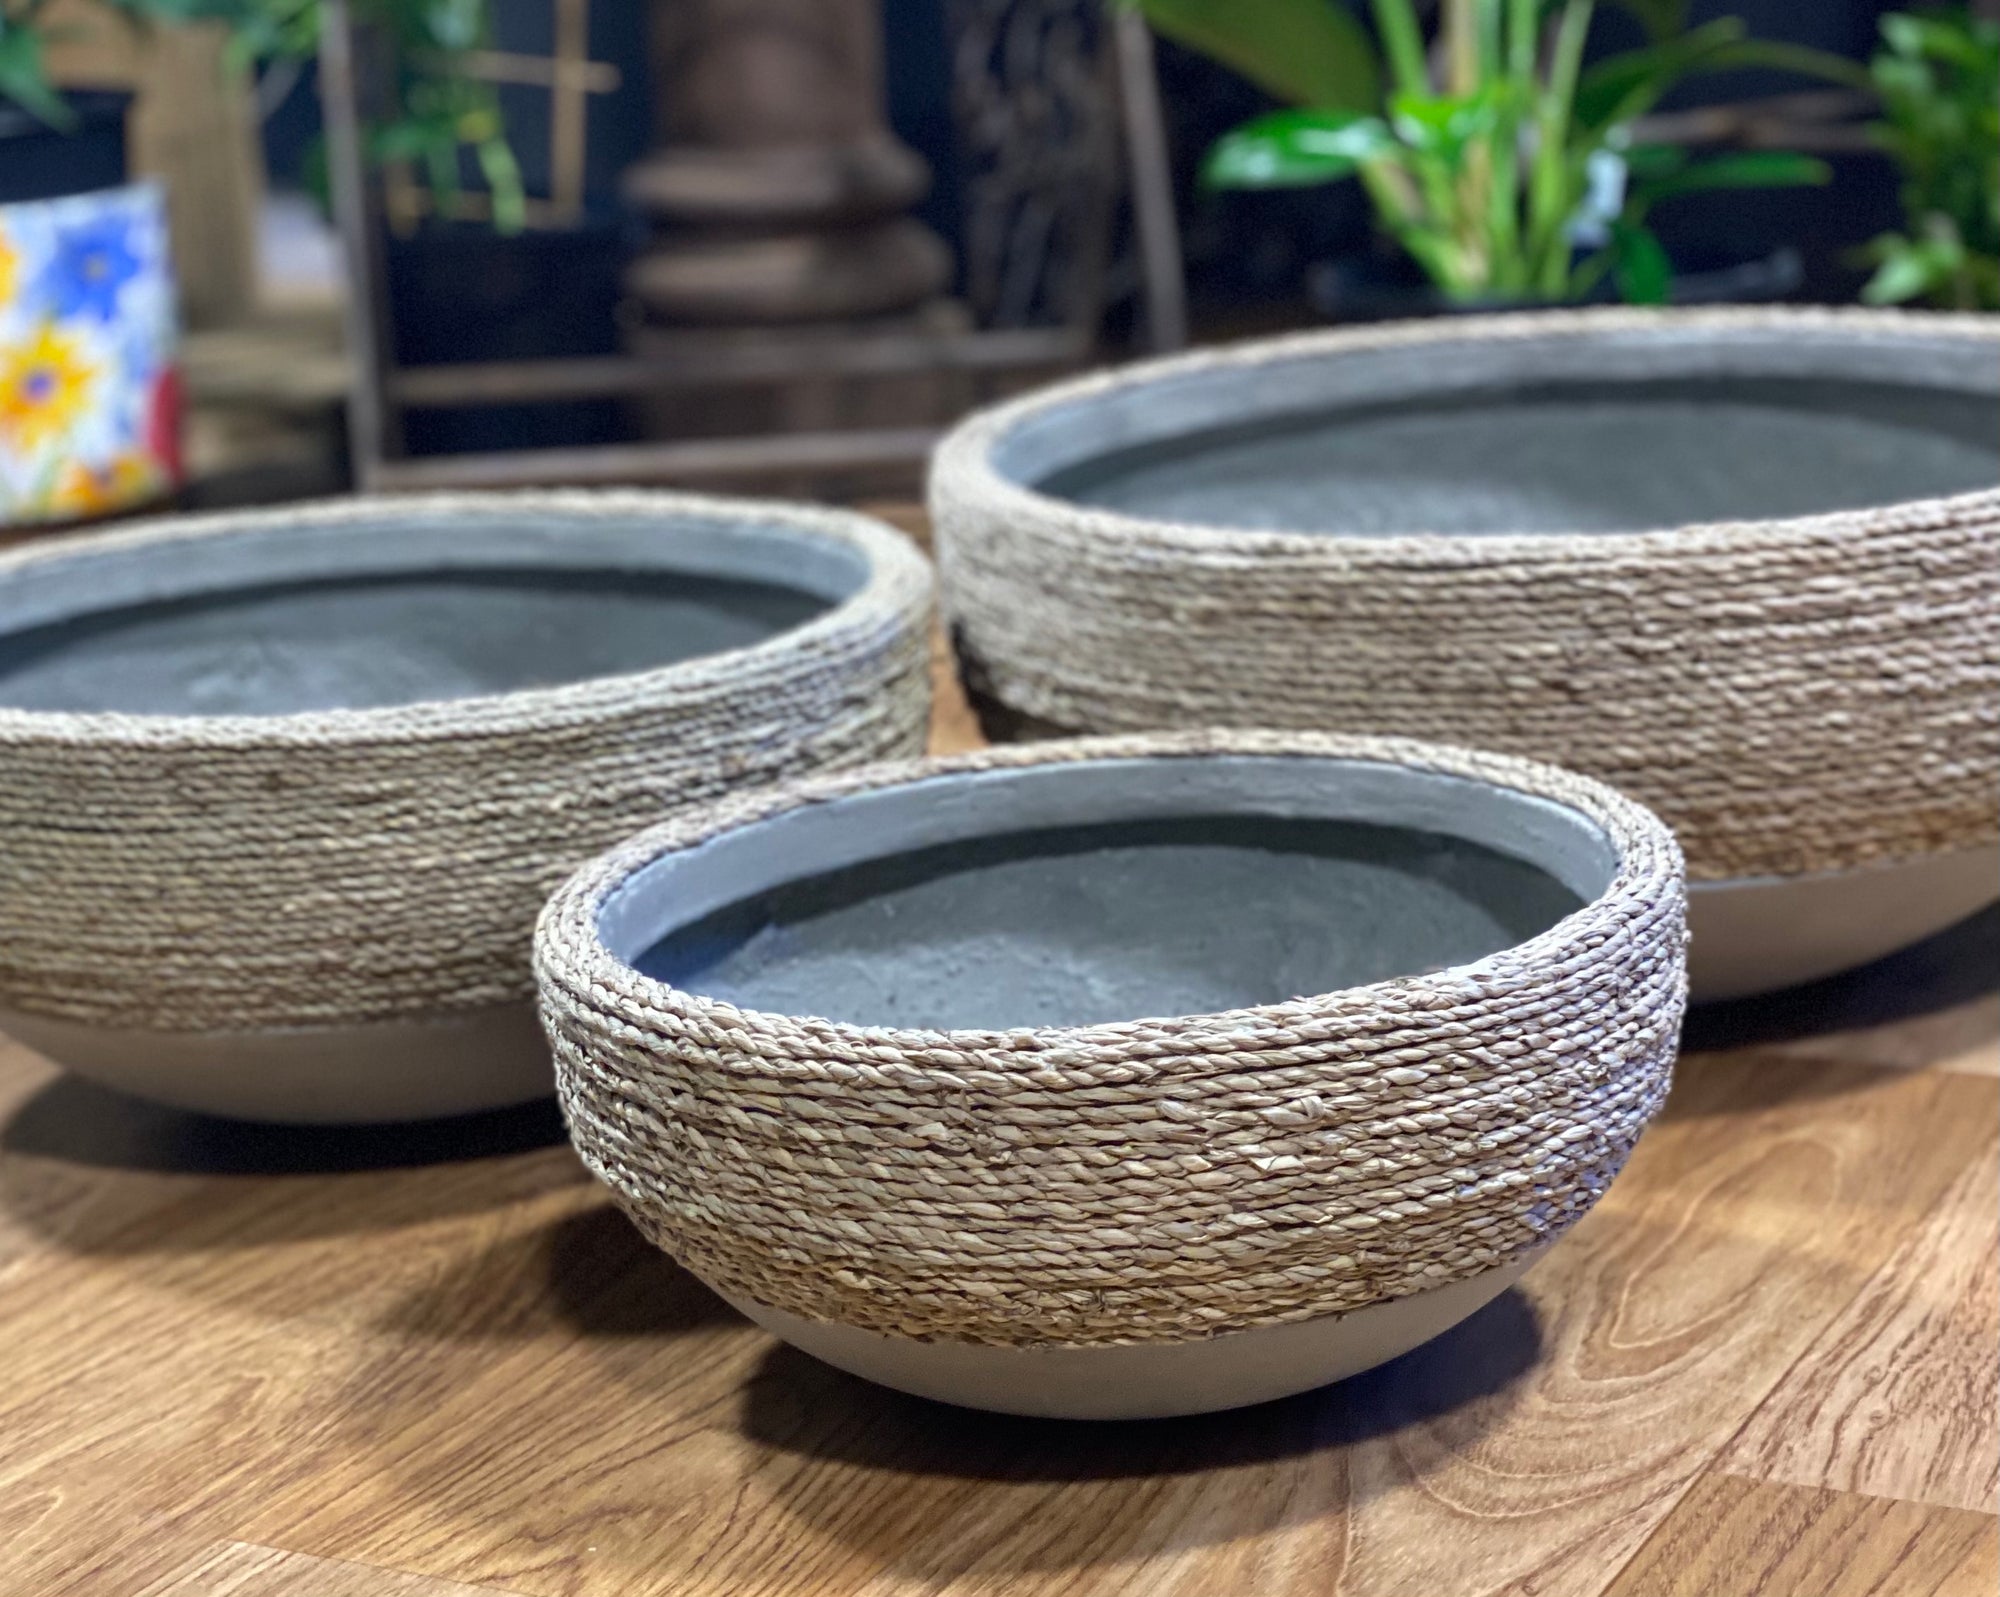 Cairo bowl pots